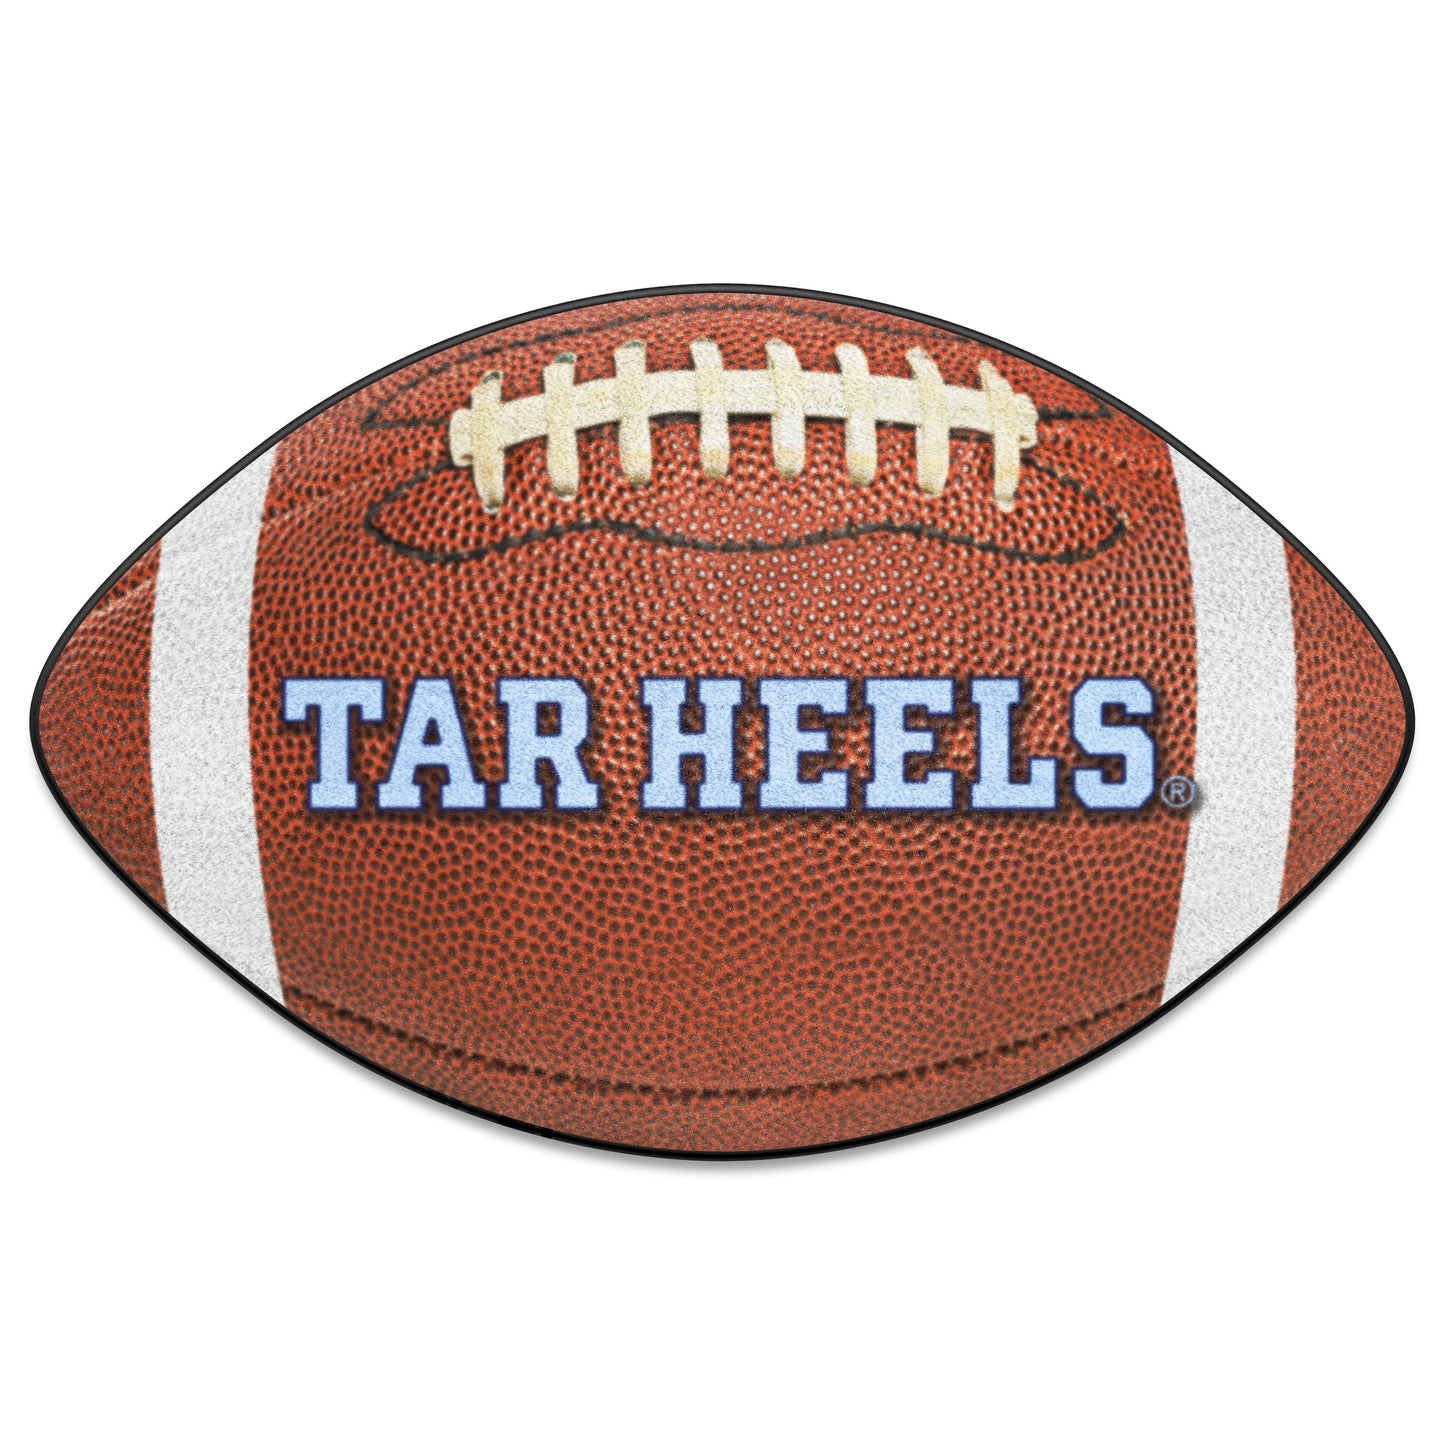 North Carolina Tar Heels Football Mat with Tar Heel Logo by Fanmats